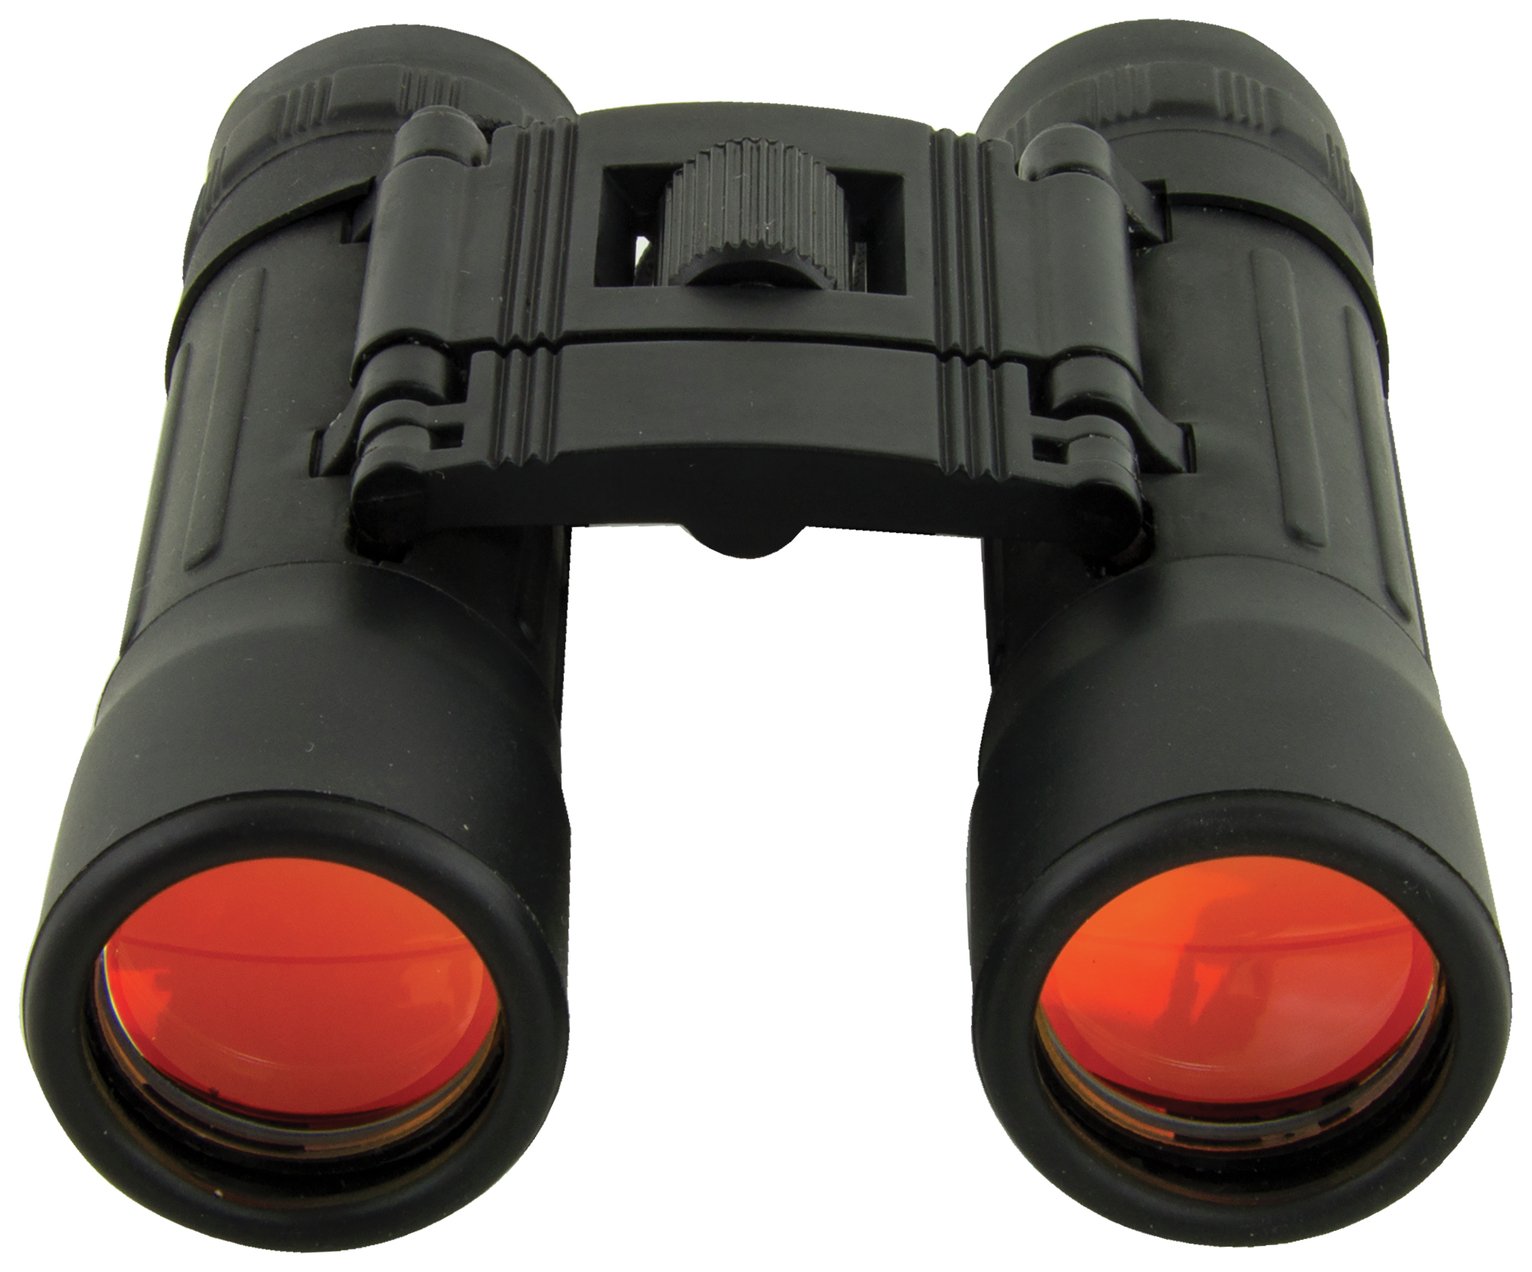 Scott & Lawson Compact Folding Binoculars review